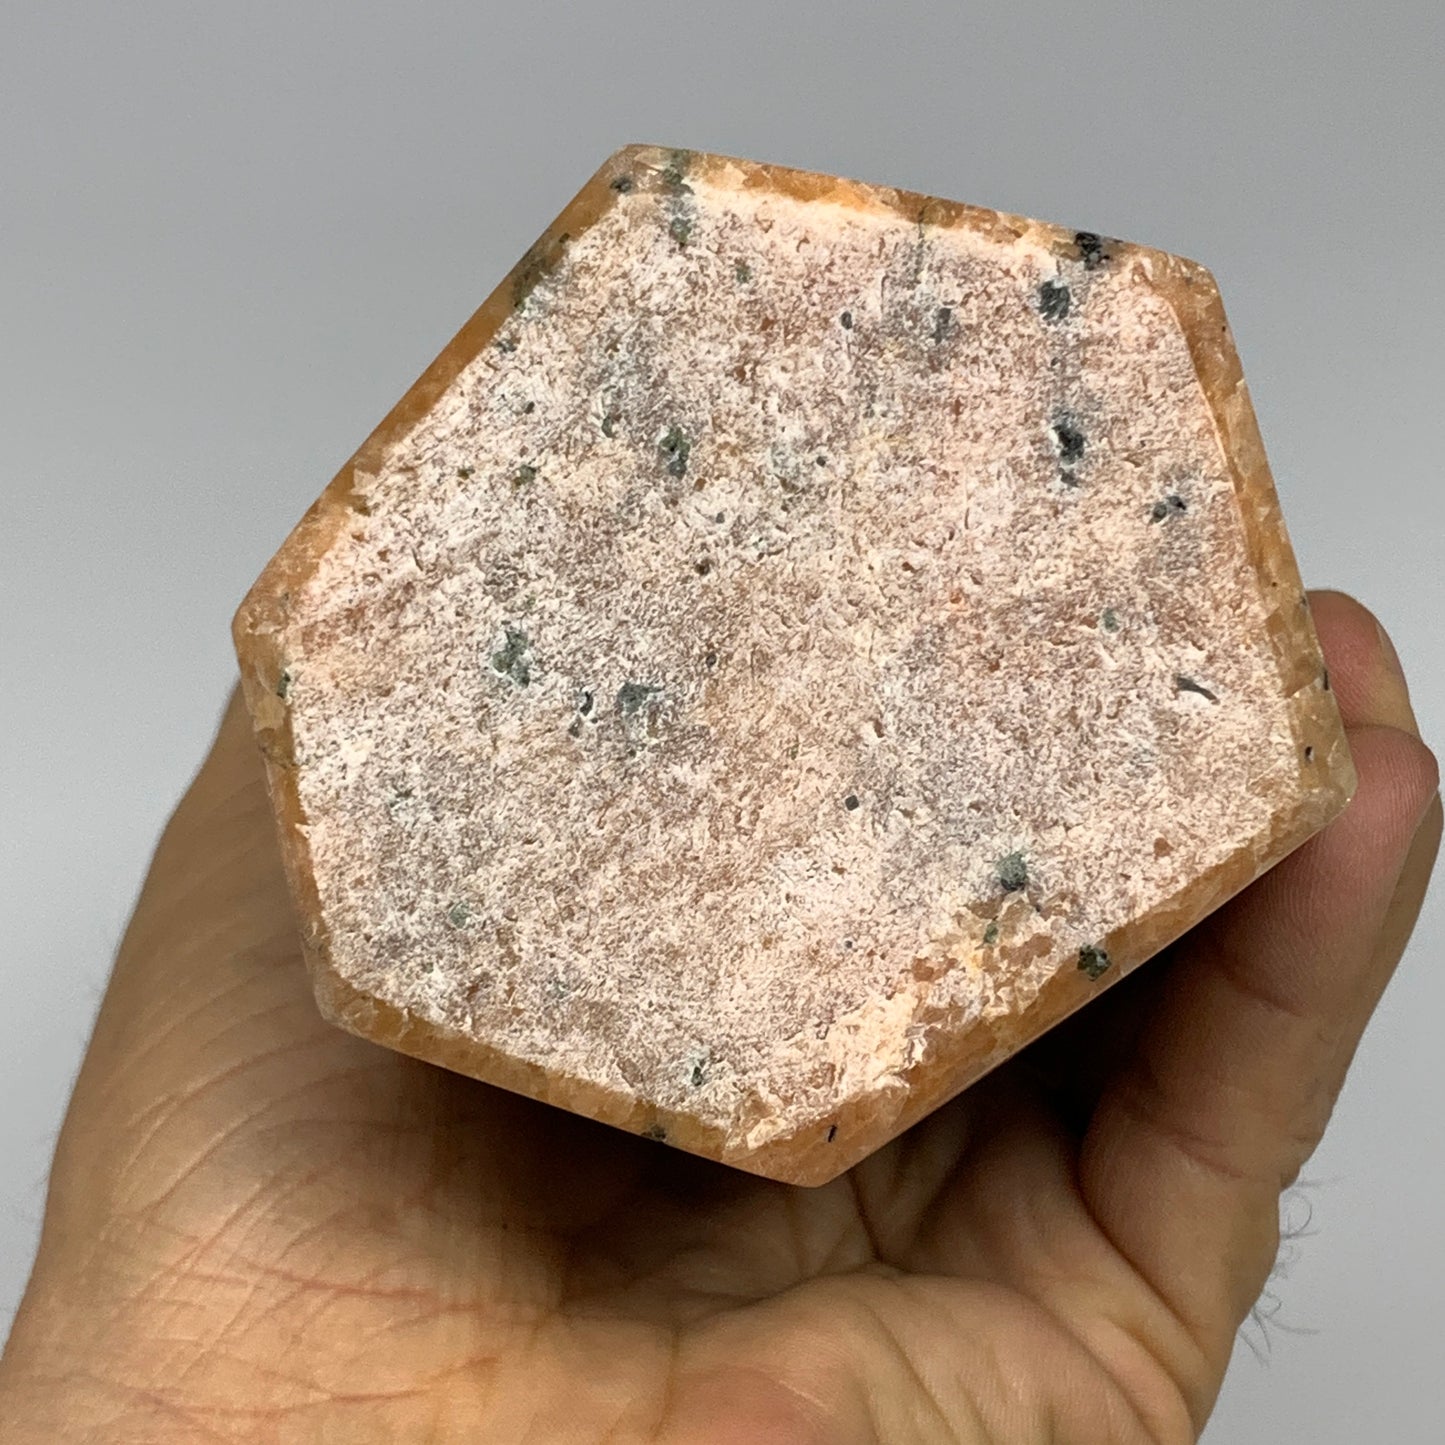 2095g, 10.75"x3"x2.5" Orange Calcite Tower Point Crystal @Madagascar,B15067